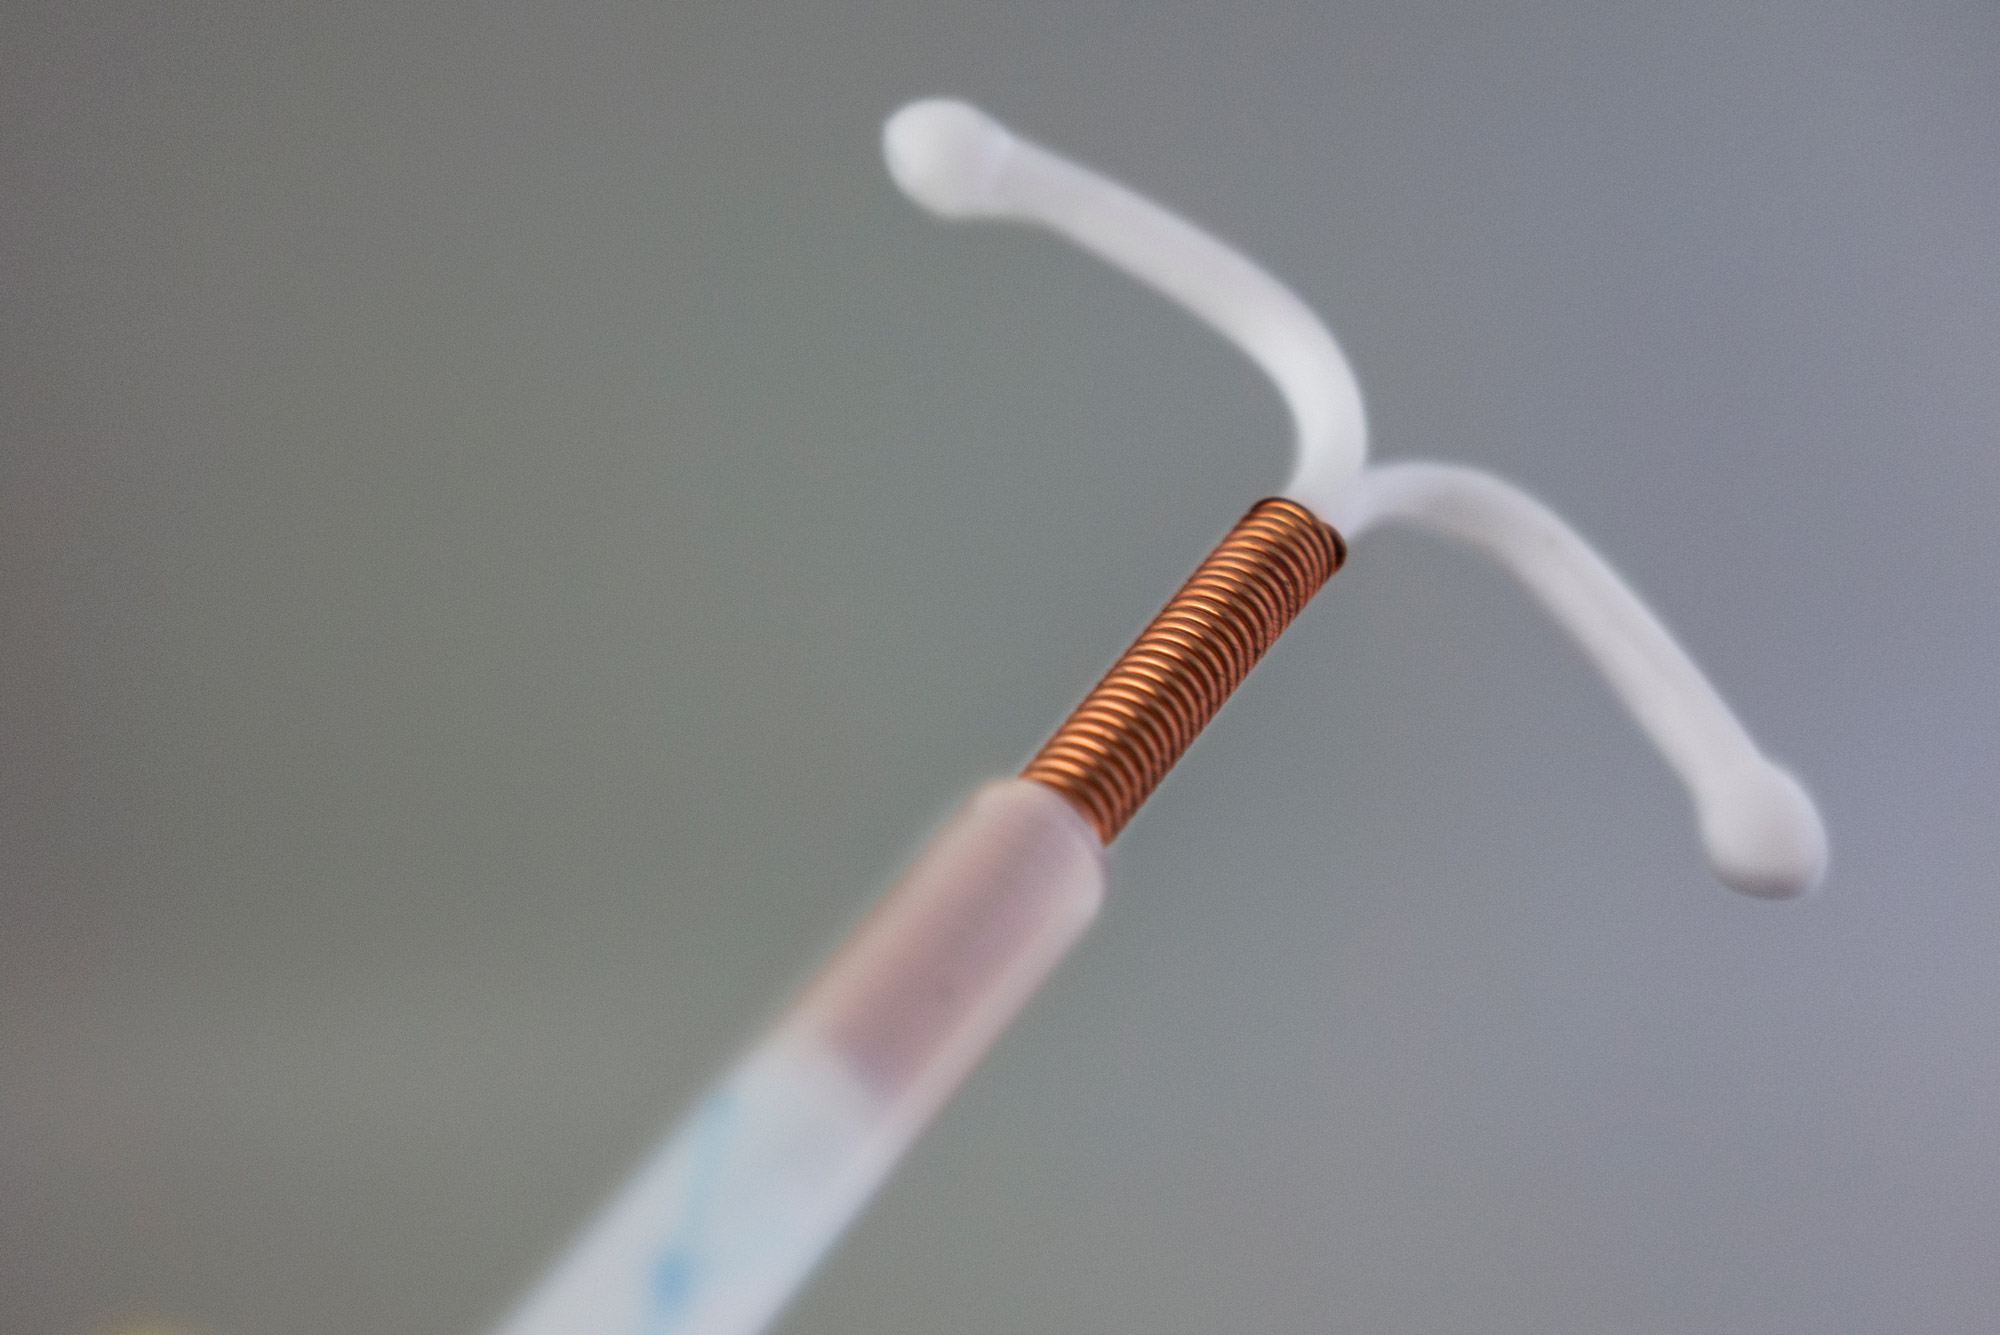 Image of IUD for Diverse Teams in Contraceptive Design